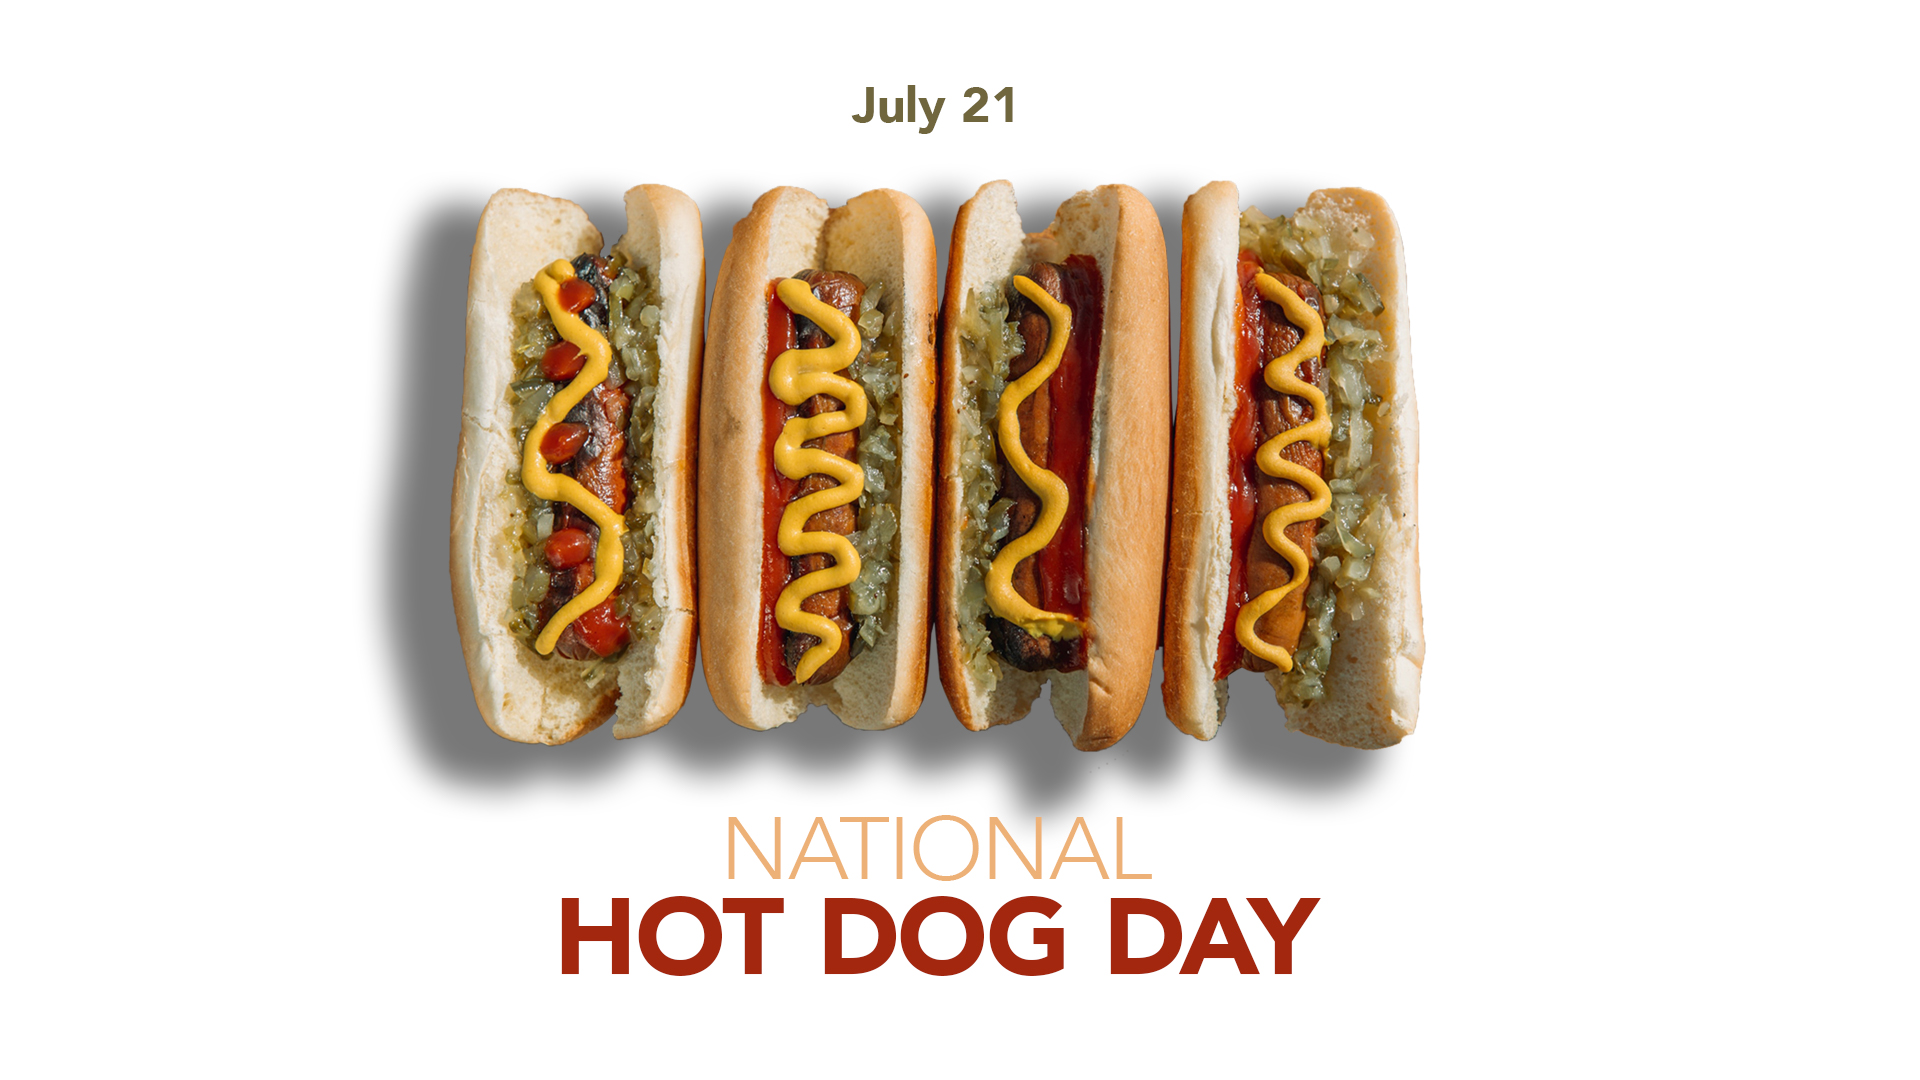 Nation Hot Dog Day July 21 Digital Signage Graphic